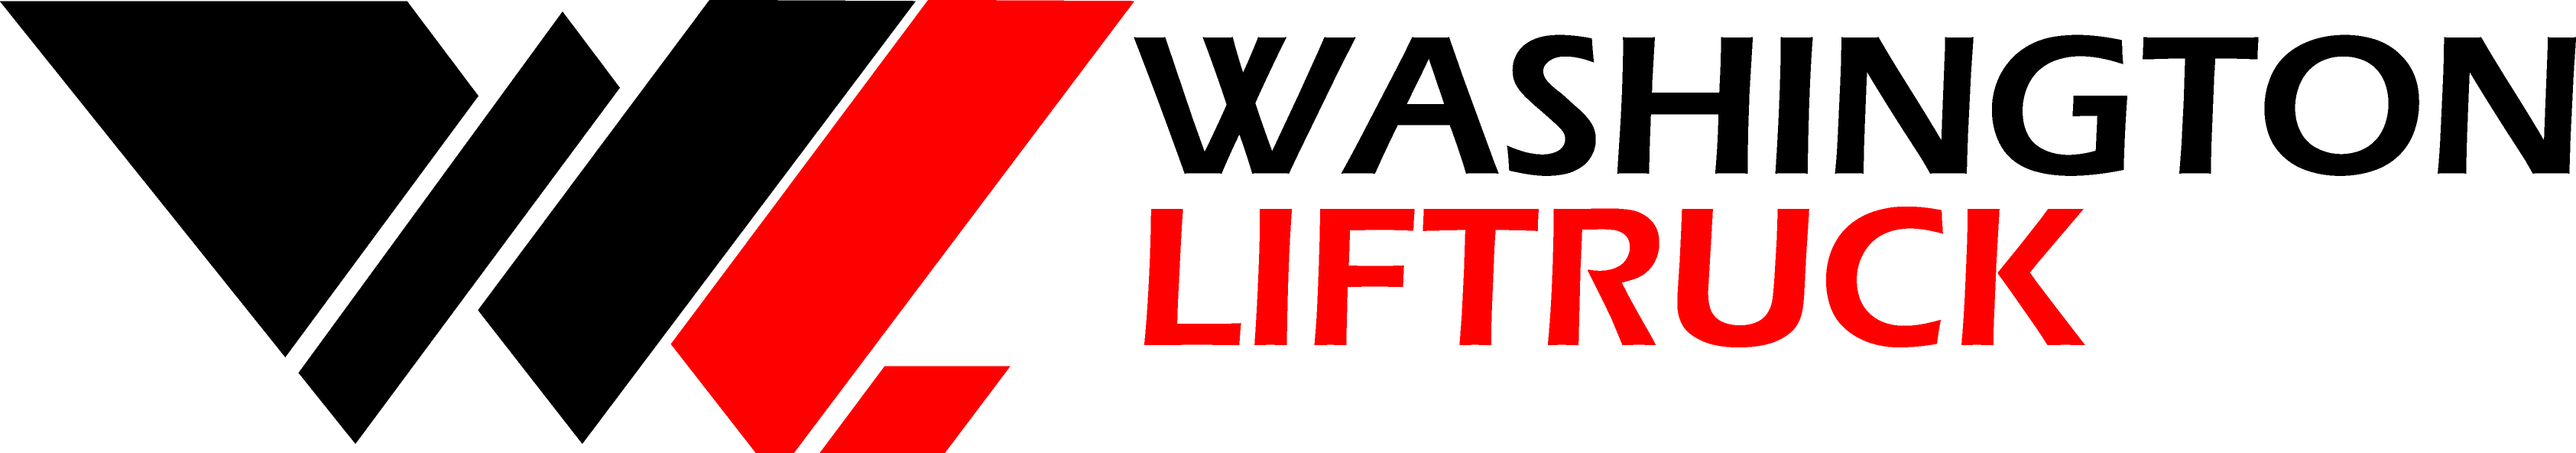 Washington Liftruck, Inc. Logo